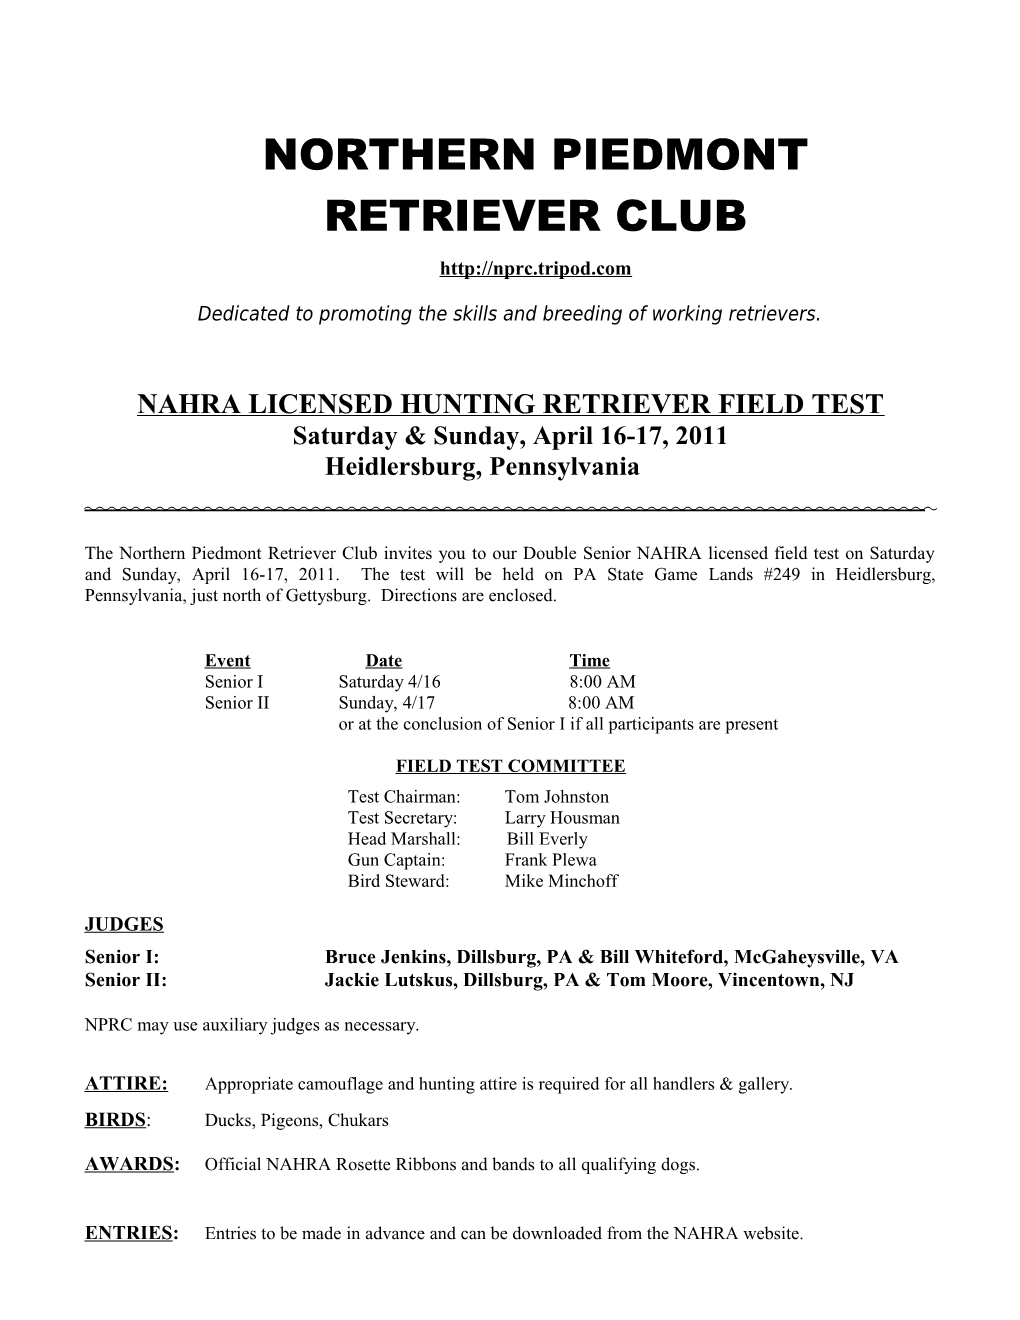 Northern Piedmont Retriever Club